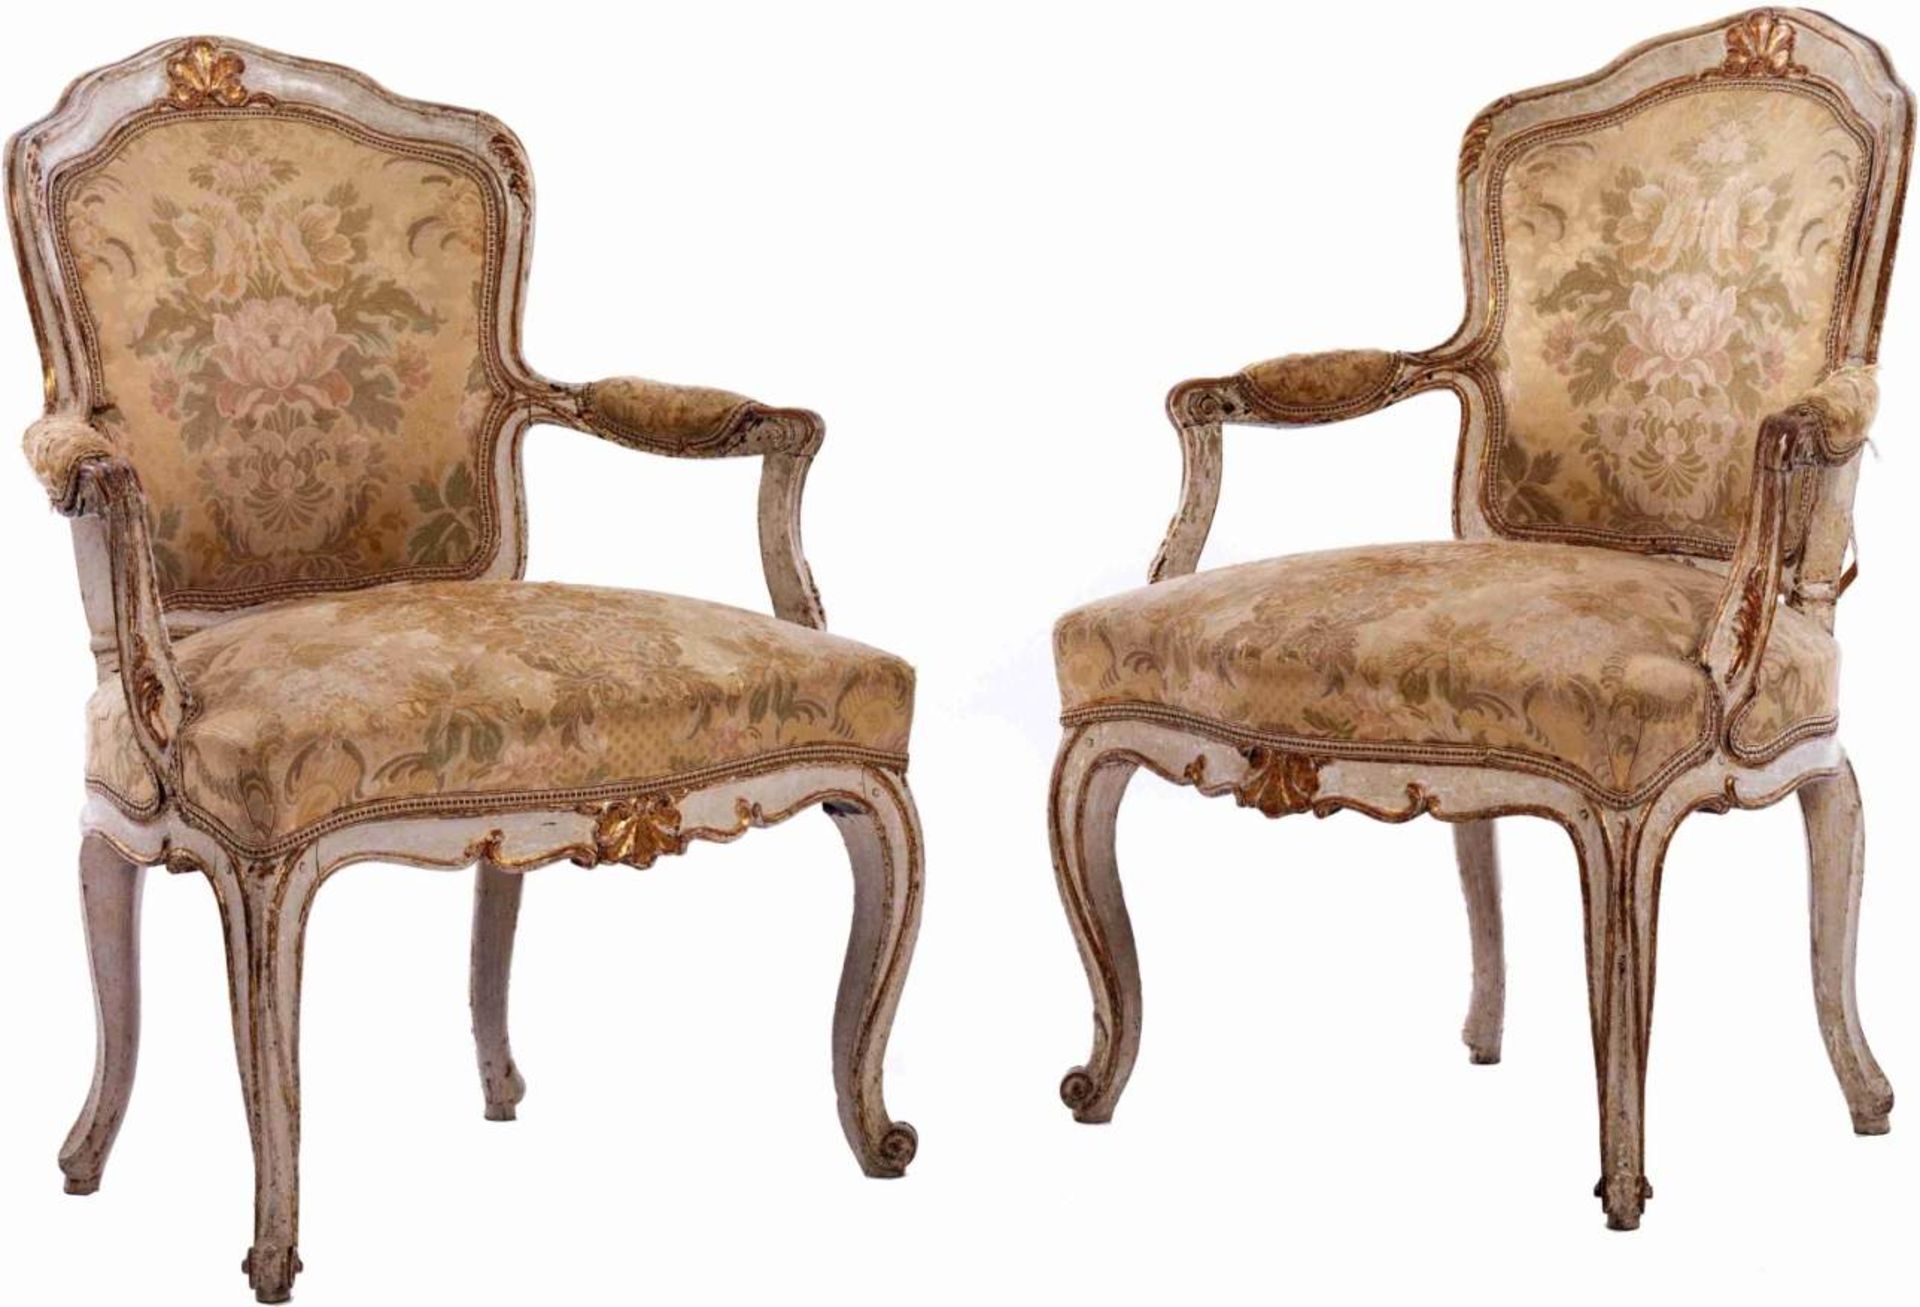 Pair of small armchairsHeight: 87 cm. Width: ca. 67 cm. Depth: ca. 50 cm. France, 18th century. - Bild 4 aus 5